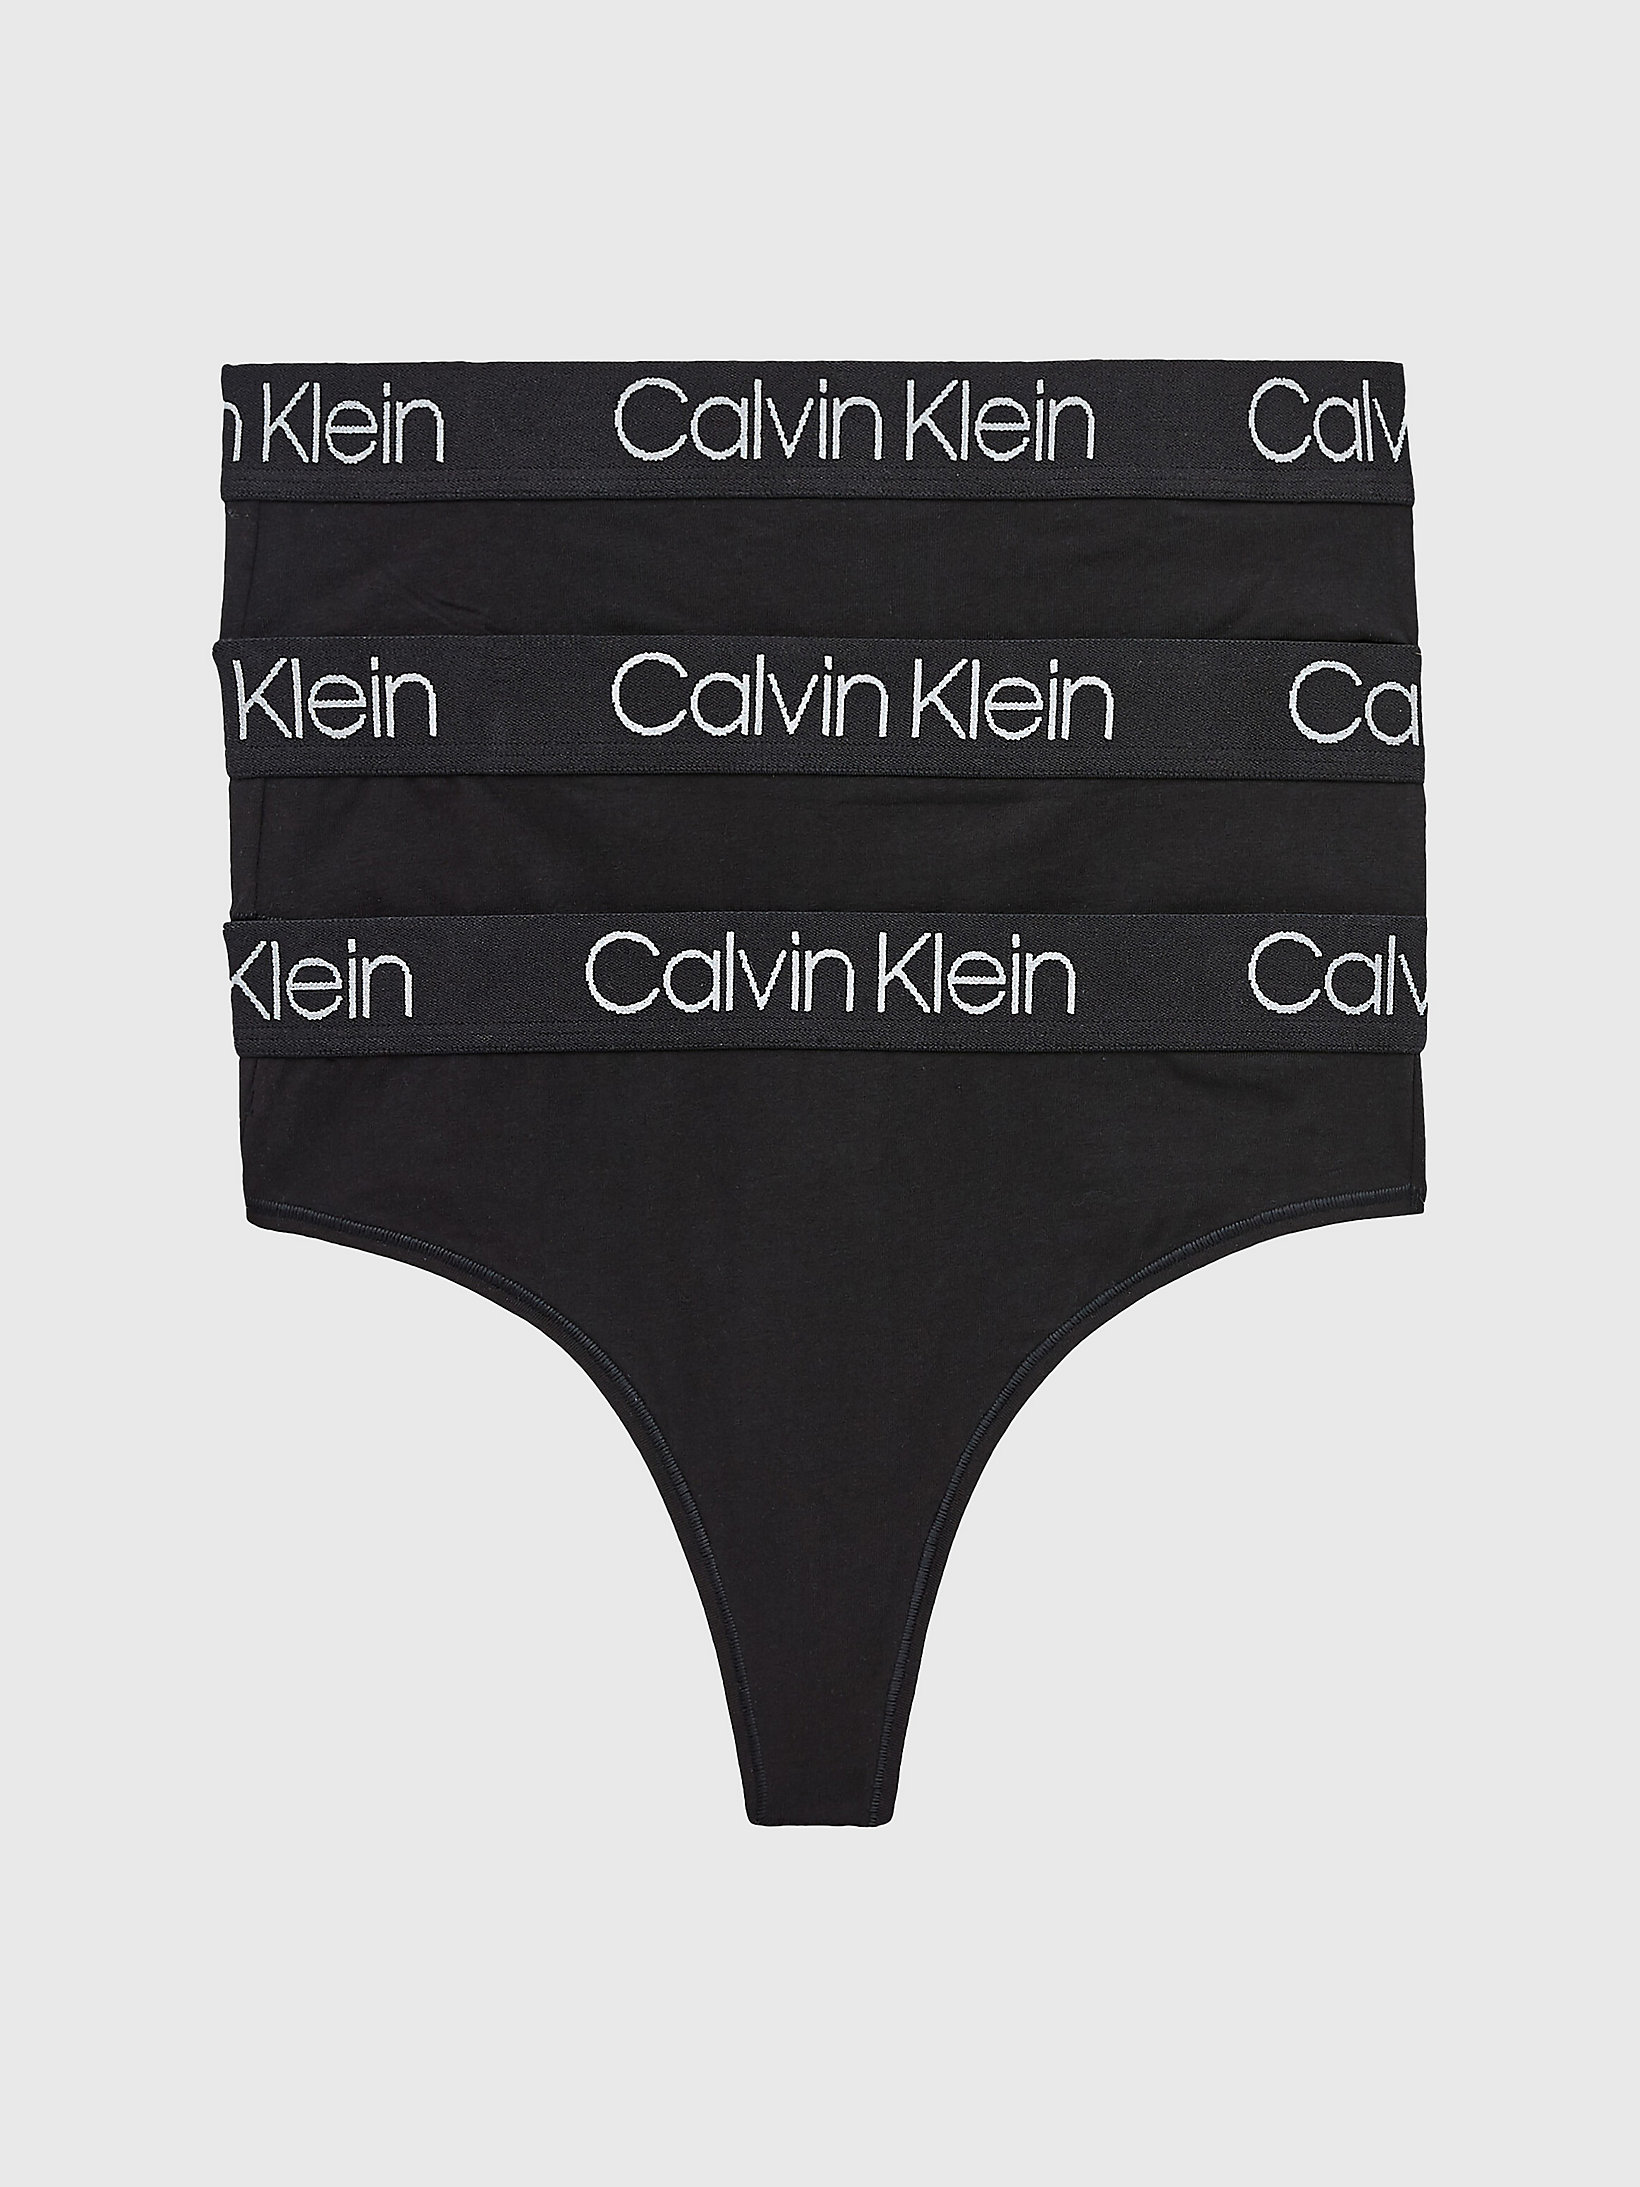 Black/black/black > Комплект стрингов с завышенной талией 3 шт. - Body > undefined Женщины - Calvin Klein